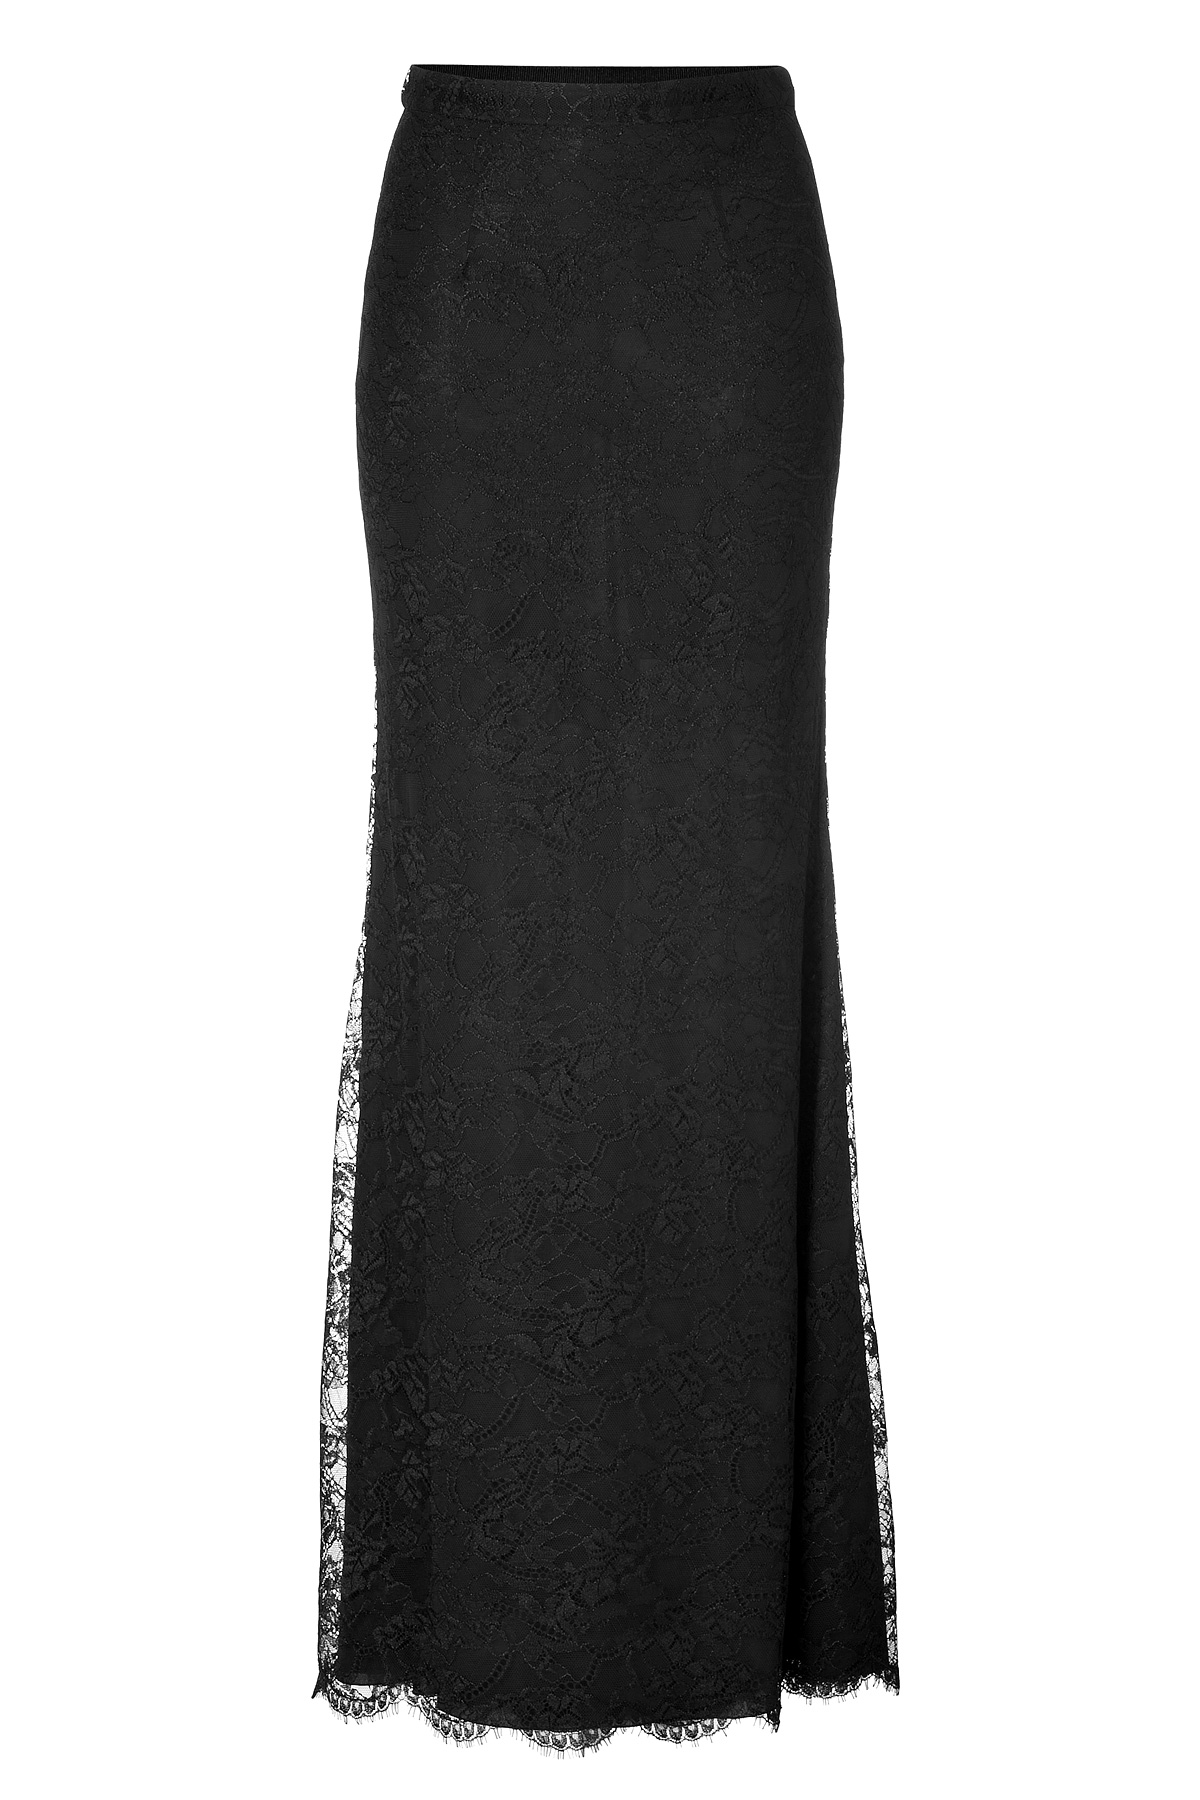 Emilio Pucci Lace Maxi Skirt in Black in Black | Lyst